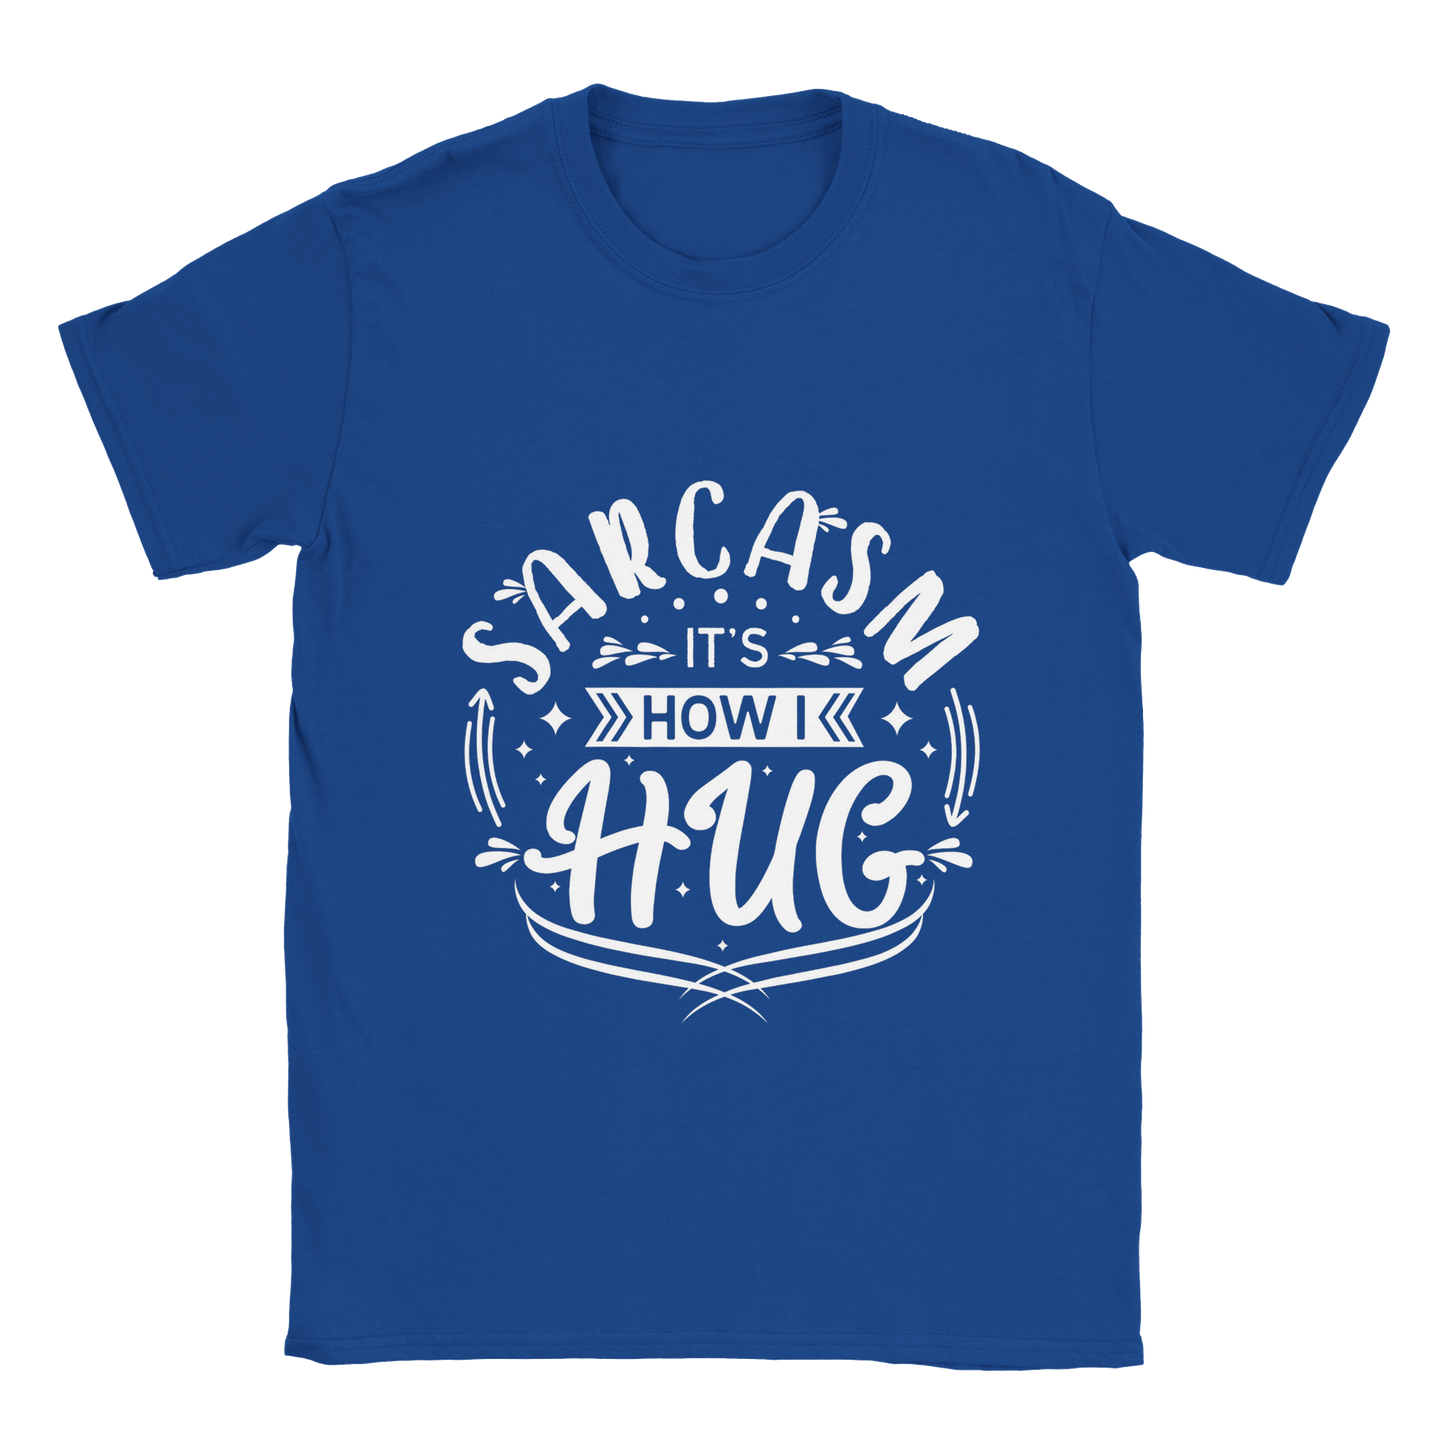 How I Hug Sarcasm Shirt - Classic Unisex Crewneck T-shirt